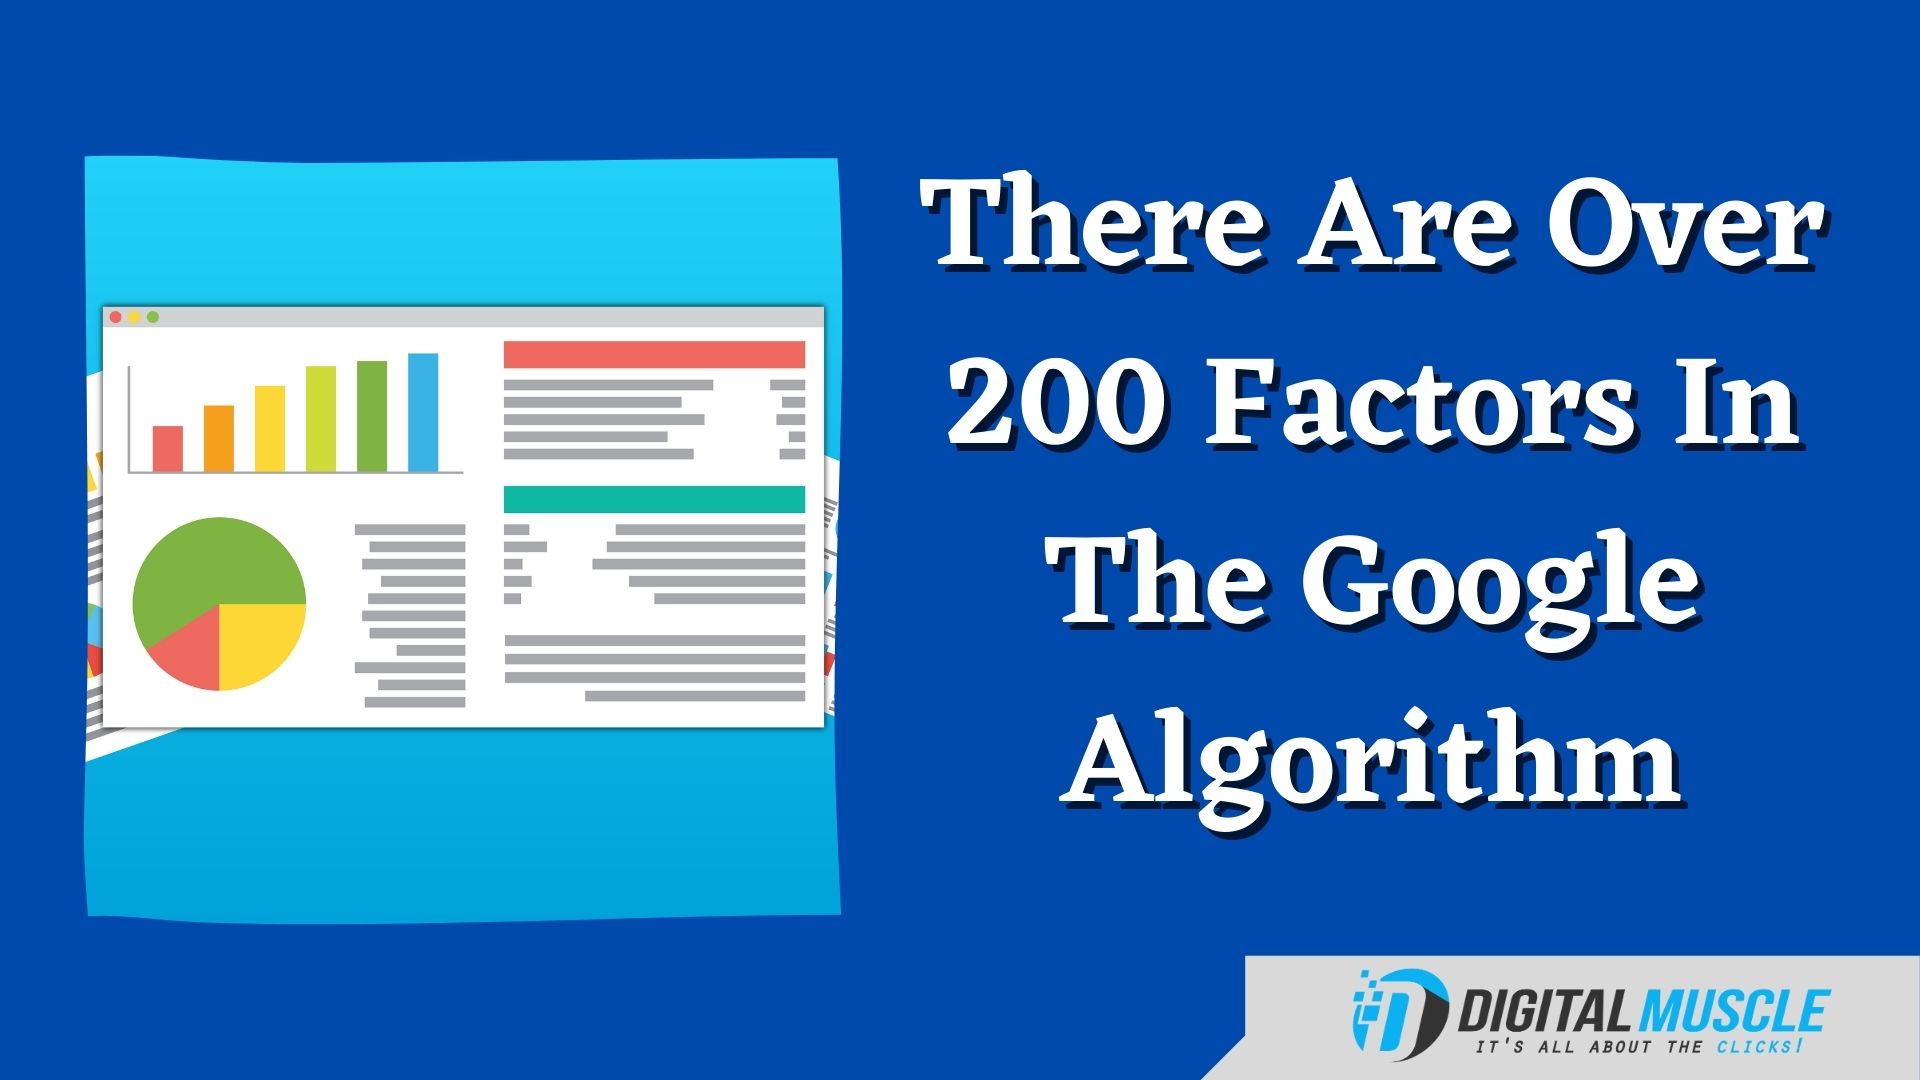 Google has over 200 ranking factors